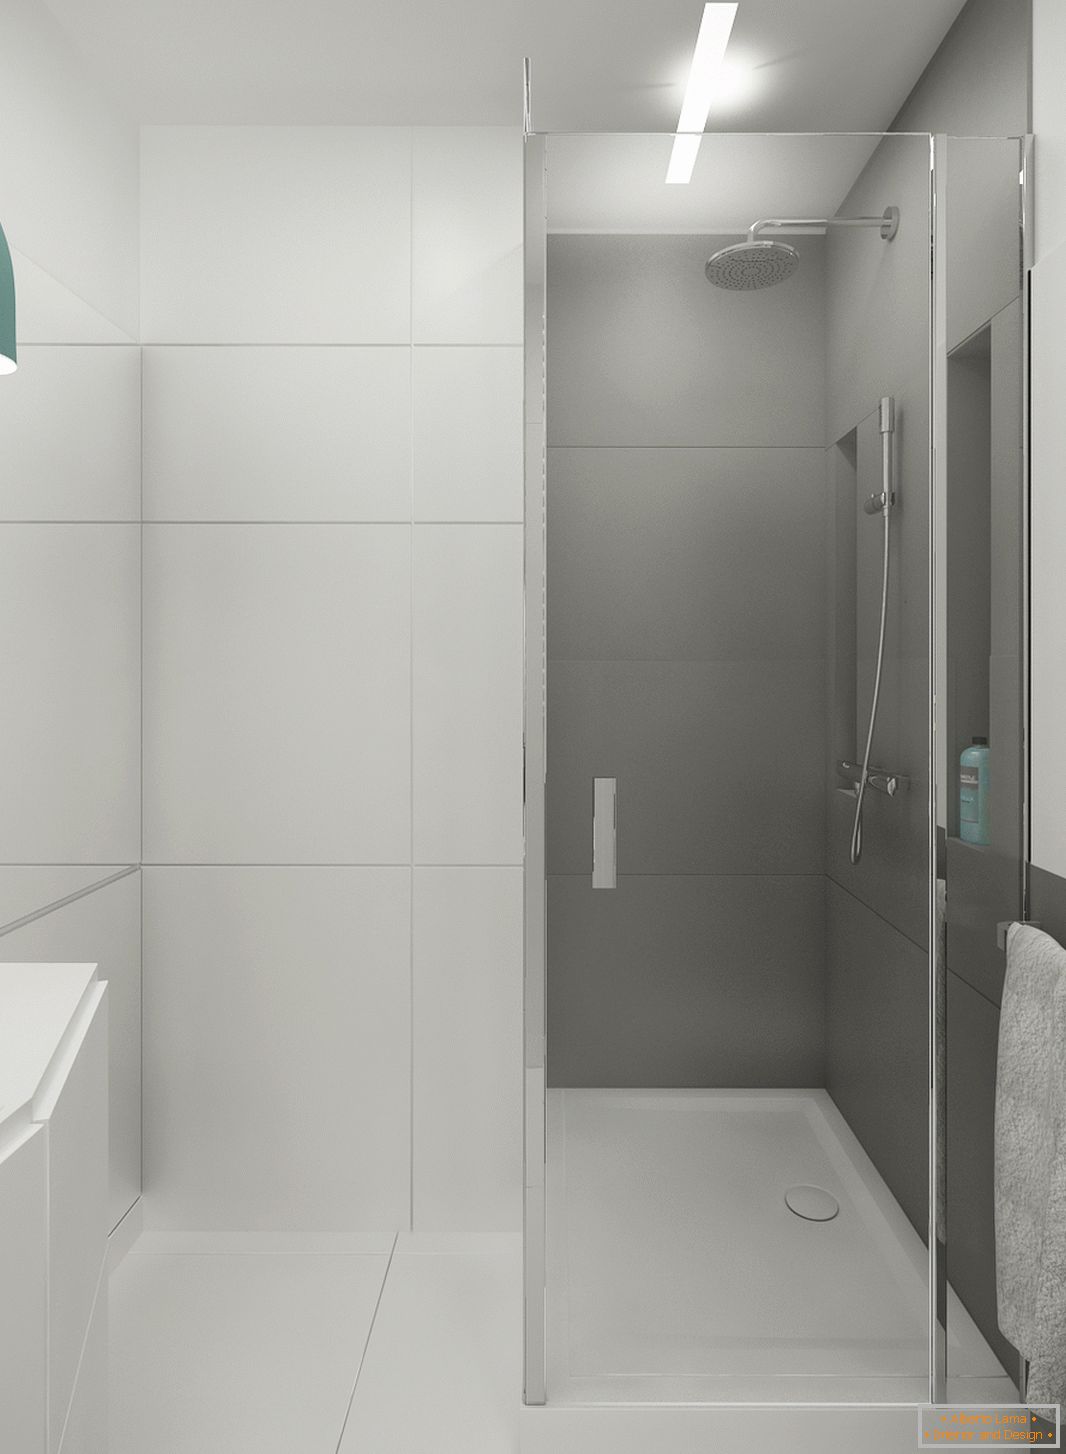 Bathroom in white color